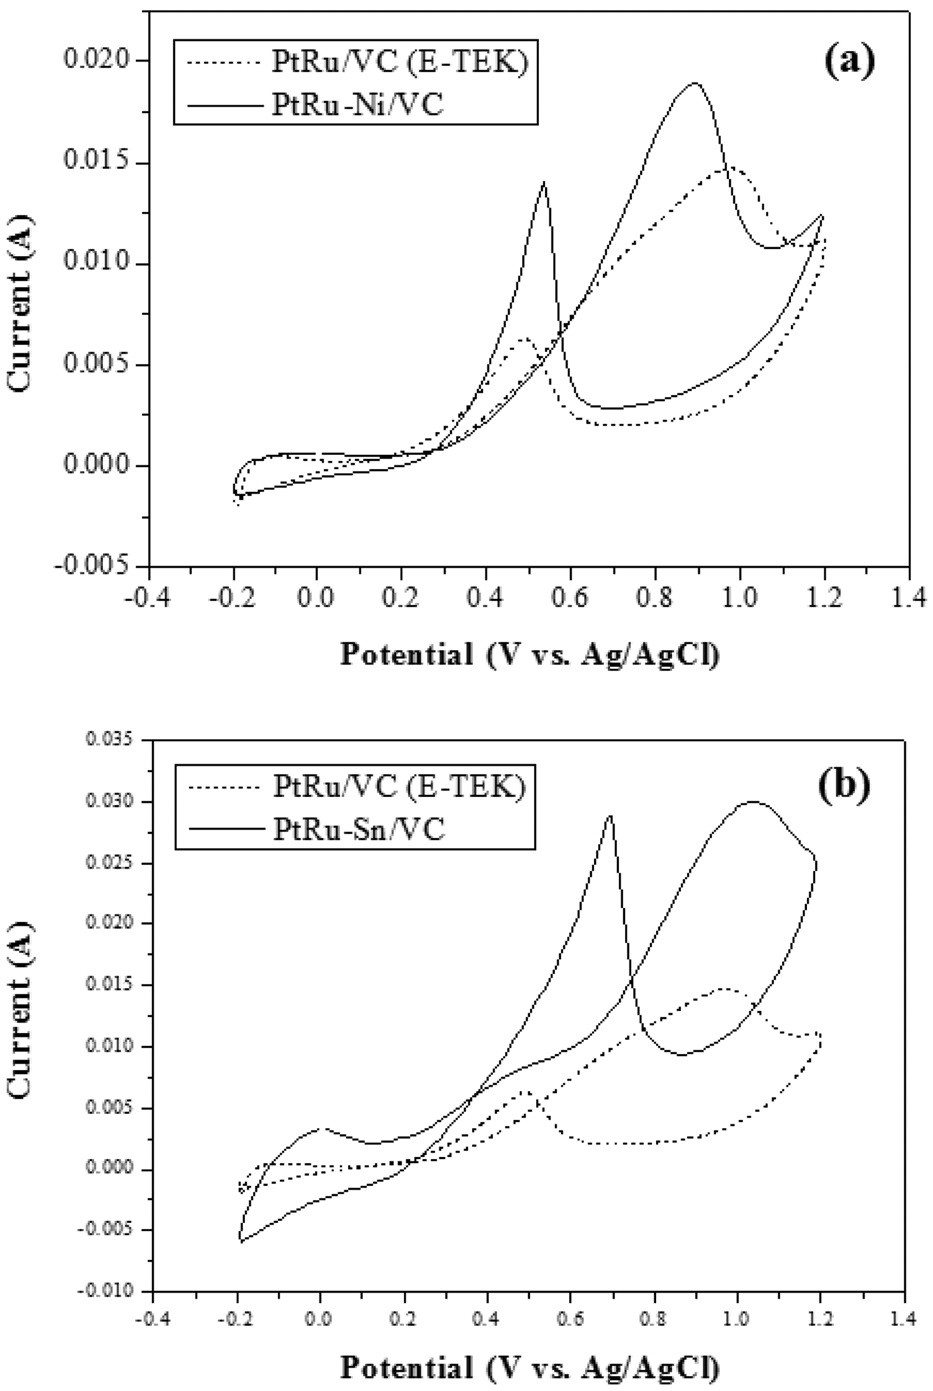 Cyclic voltammograms for methanol oxidation of PtRu/VC® (E-TEK), PtRu-Ni/VC and PtRu-Sn/VC catalysts in 1.0 M C3OH/0.5 M H2SO4